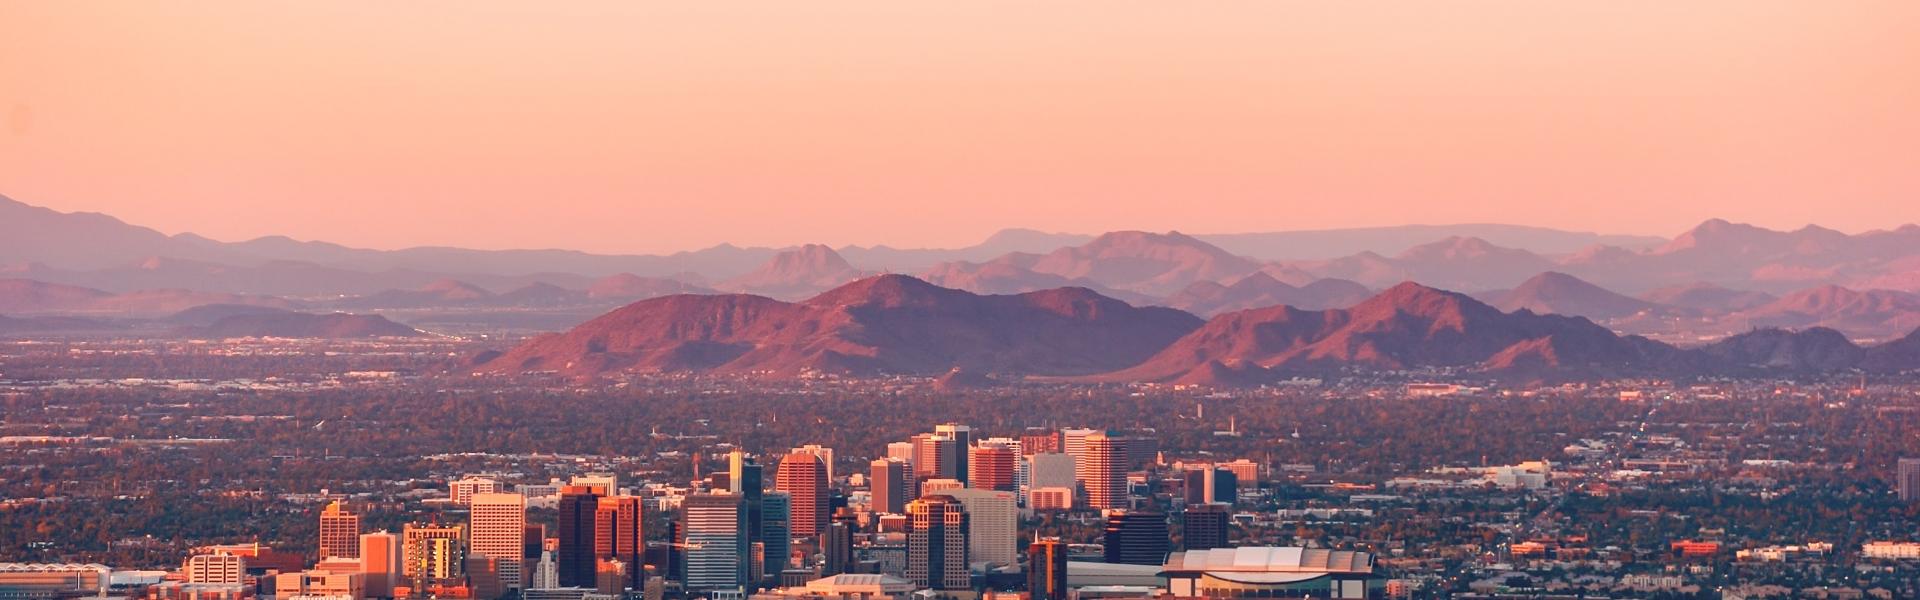 Top Destinations for a Weekend Getaway in Arizona - HomeToGo